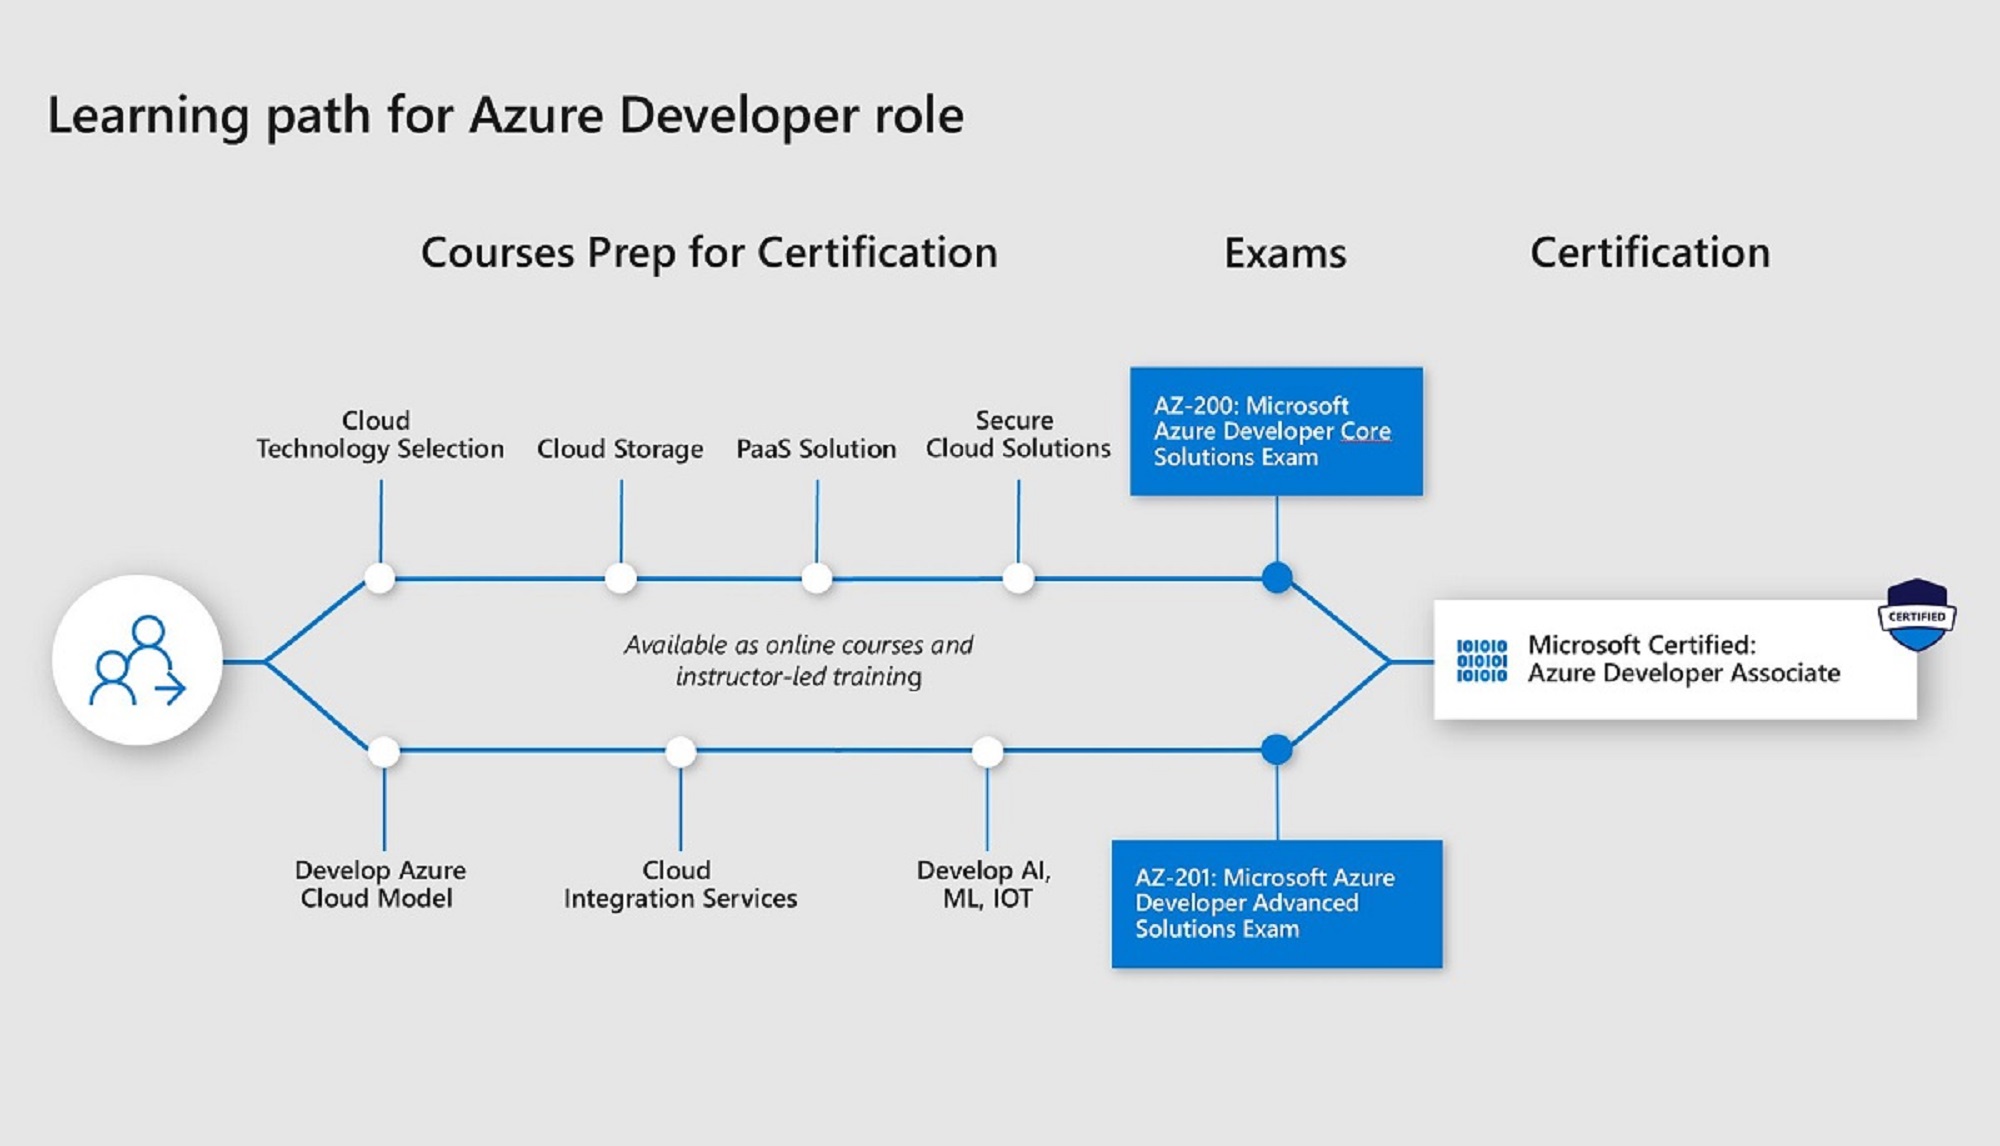 Microsoft Azure Developer Associate Exams and Certification